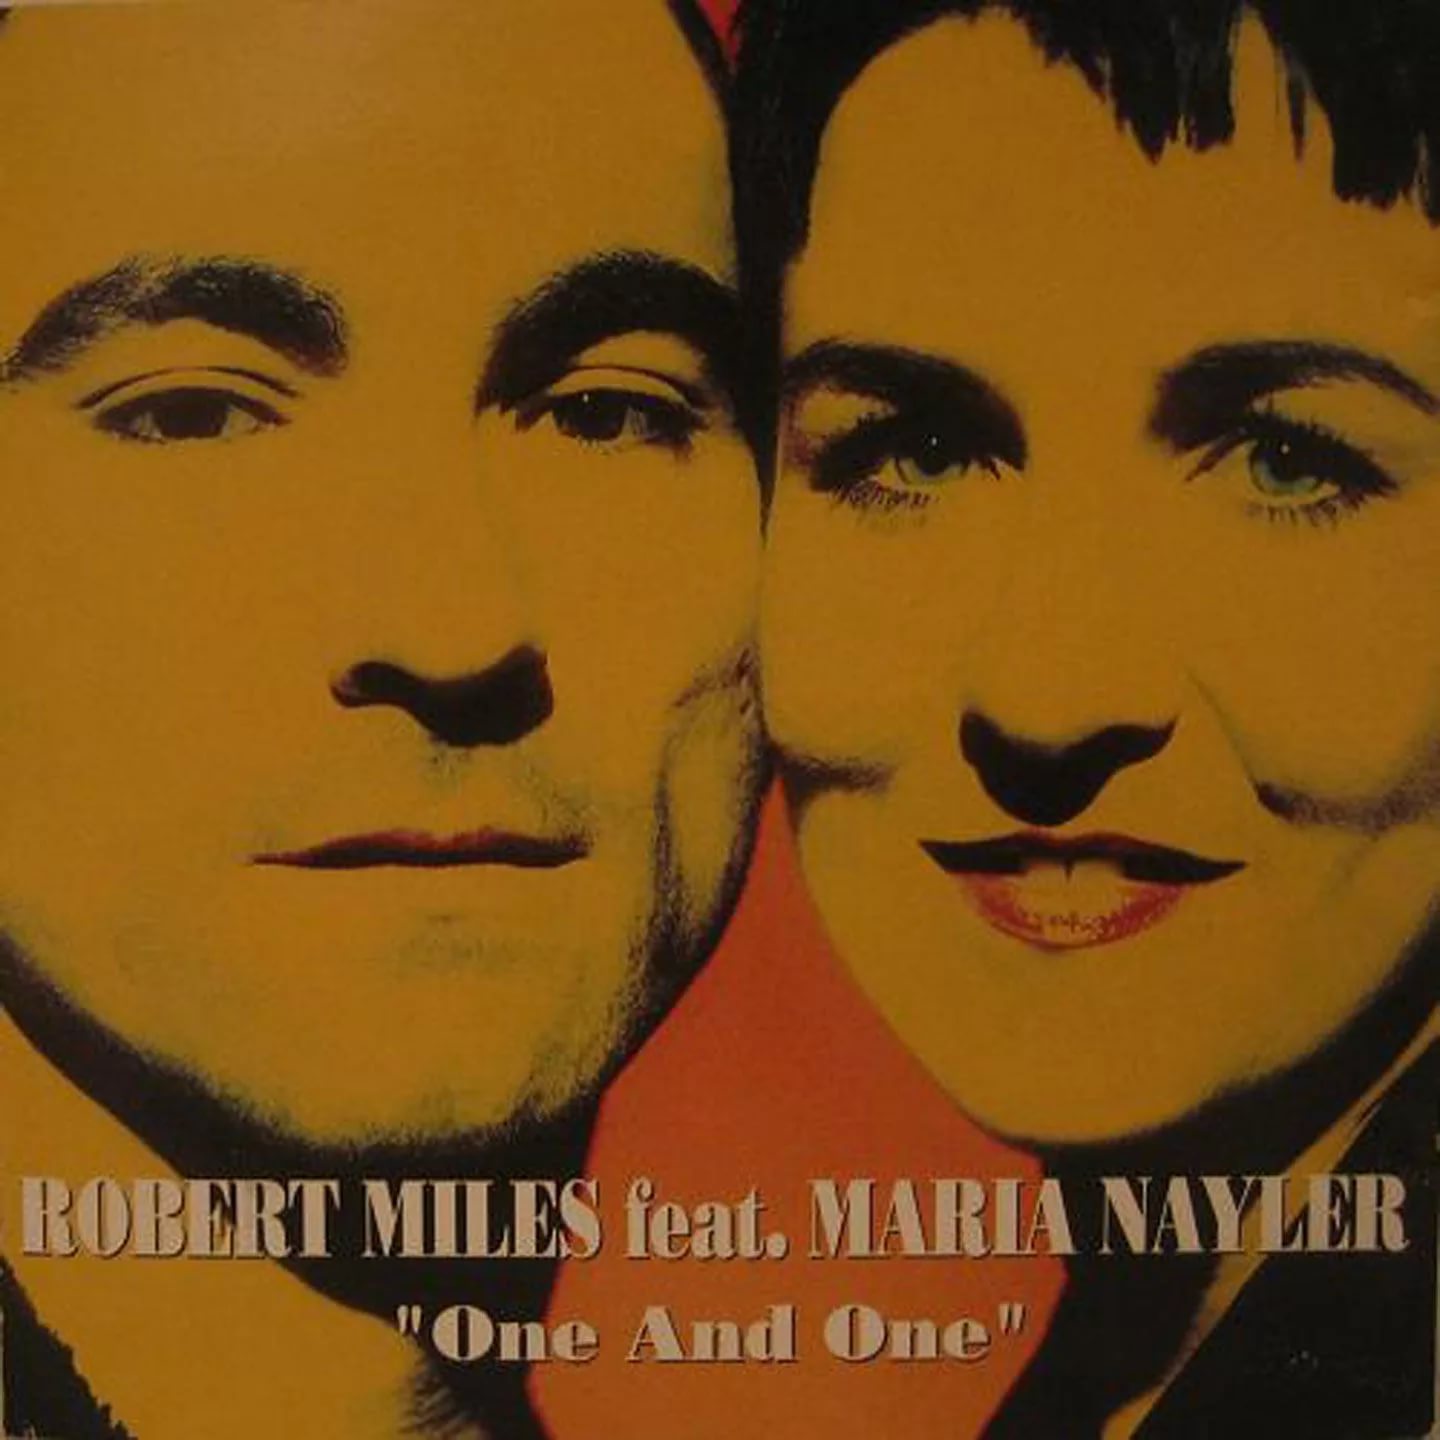 Robert miles песни. Robert Miles one and one. Maria Nayler one and one. And one обложки альбомов. Robert Miles - one & one обложки альбомов.